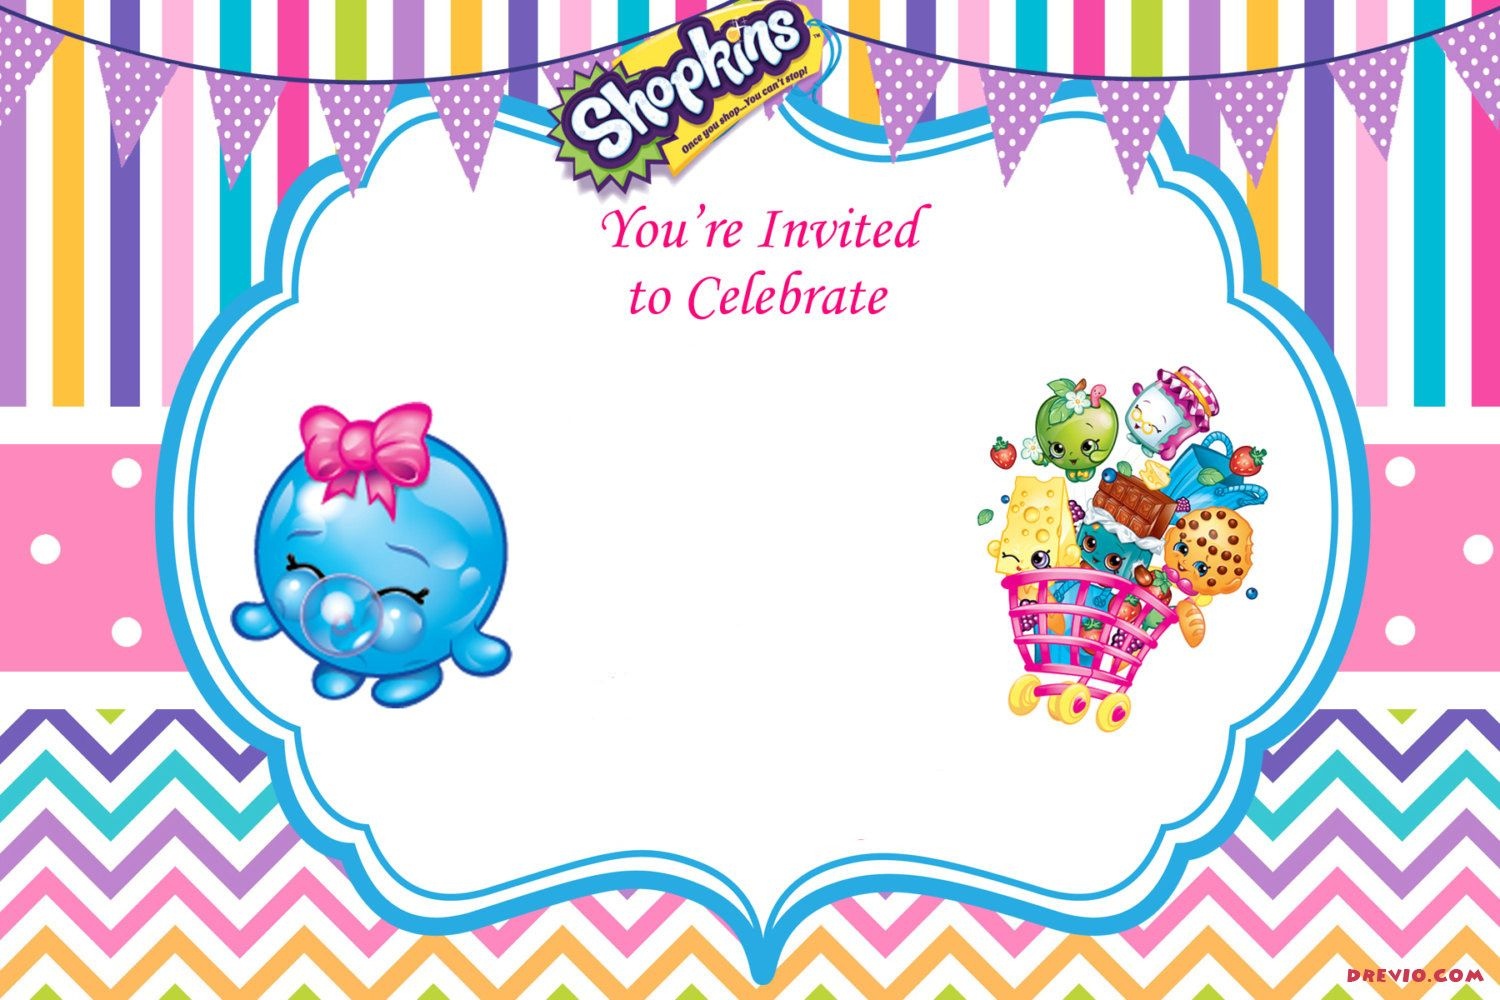 Updated - Free Printable Shopkins Birthday Invitation | Event - Free Printable Shopkins Birthday Invitations